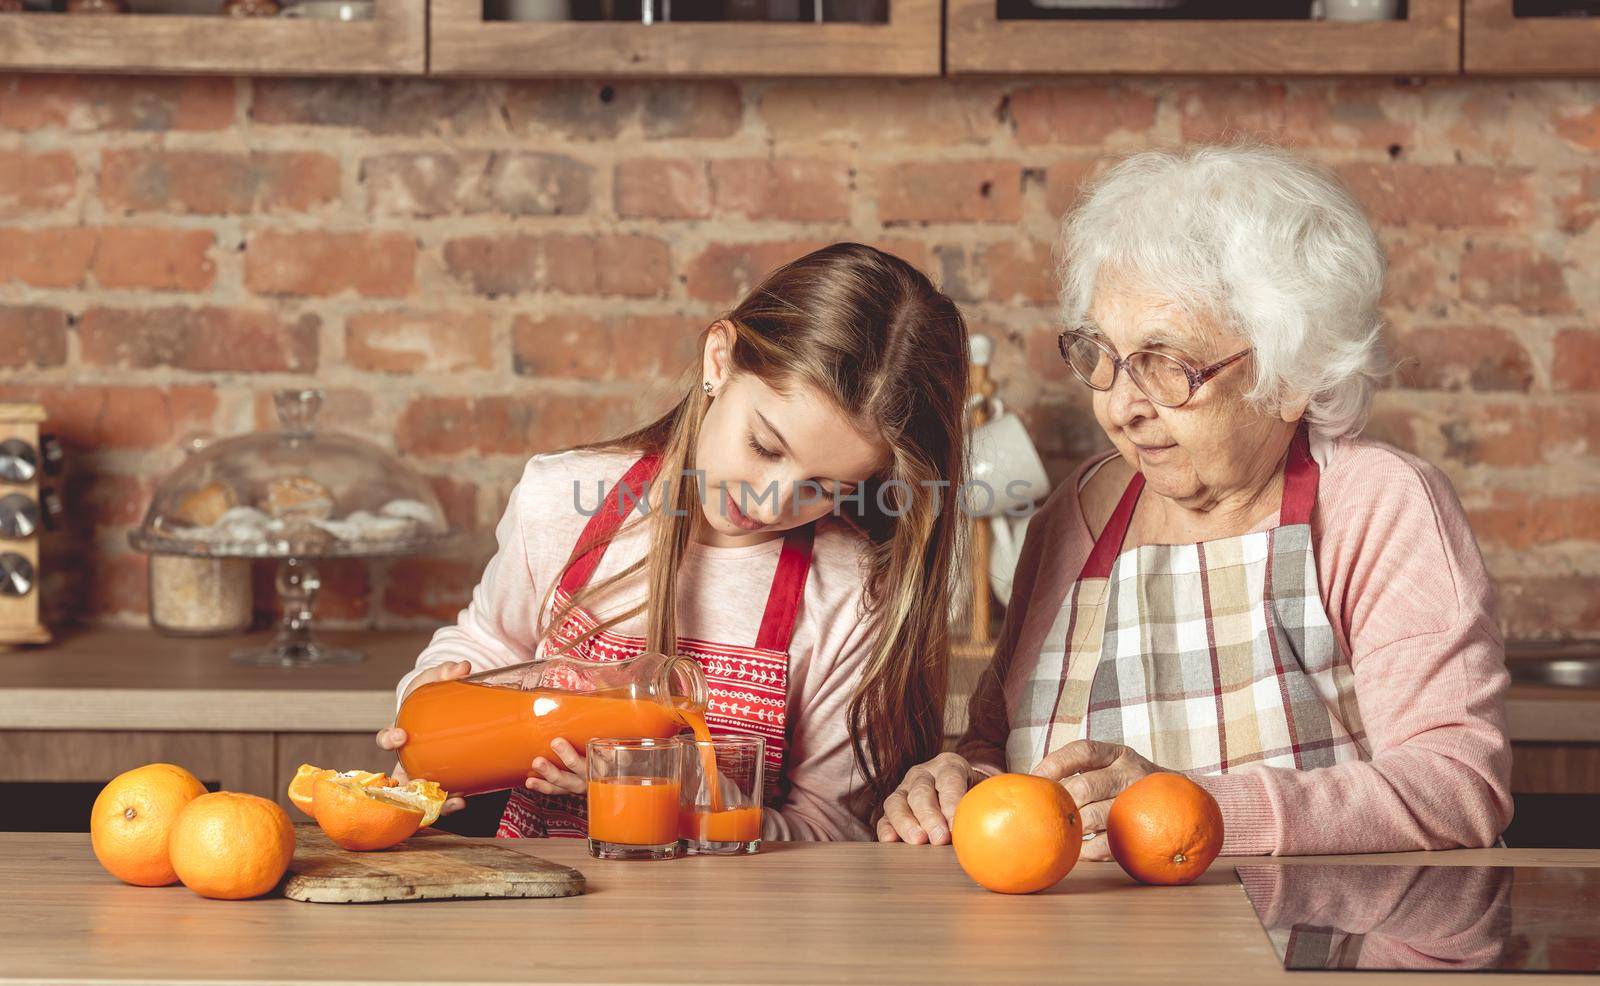 Little granddaughter making fresh orange juice with her senior grandmother on rustic kitchen